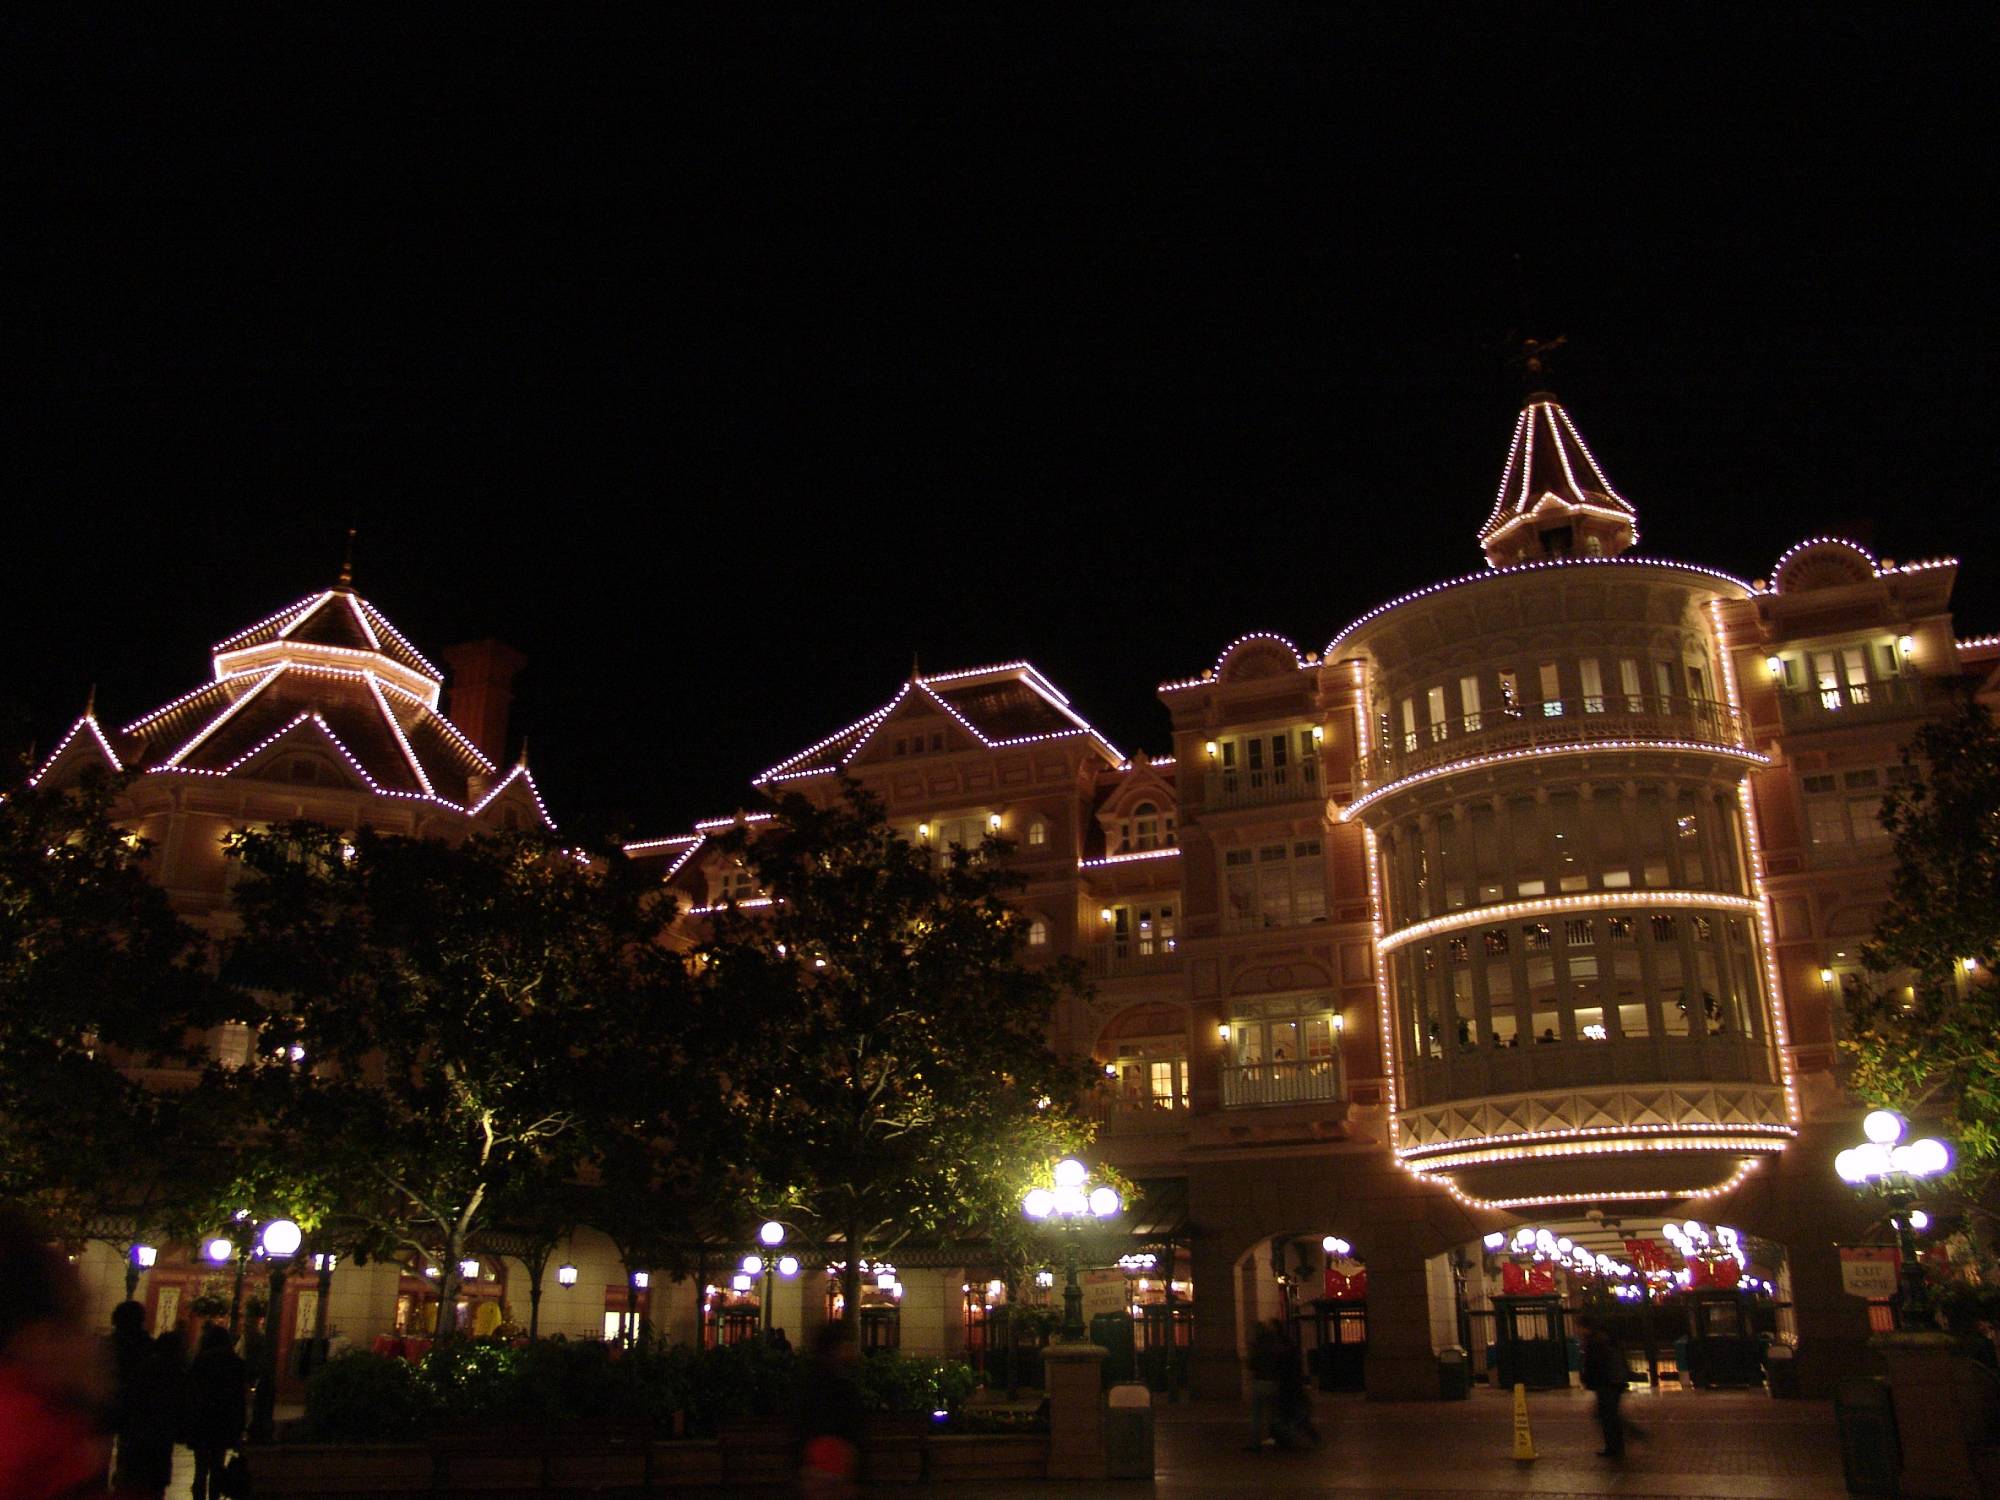 Enjoy the luxury of the Disneyland Hotel in Disneyland Paris | PassPorter.com